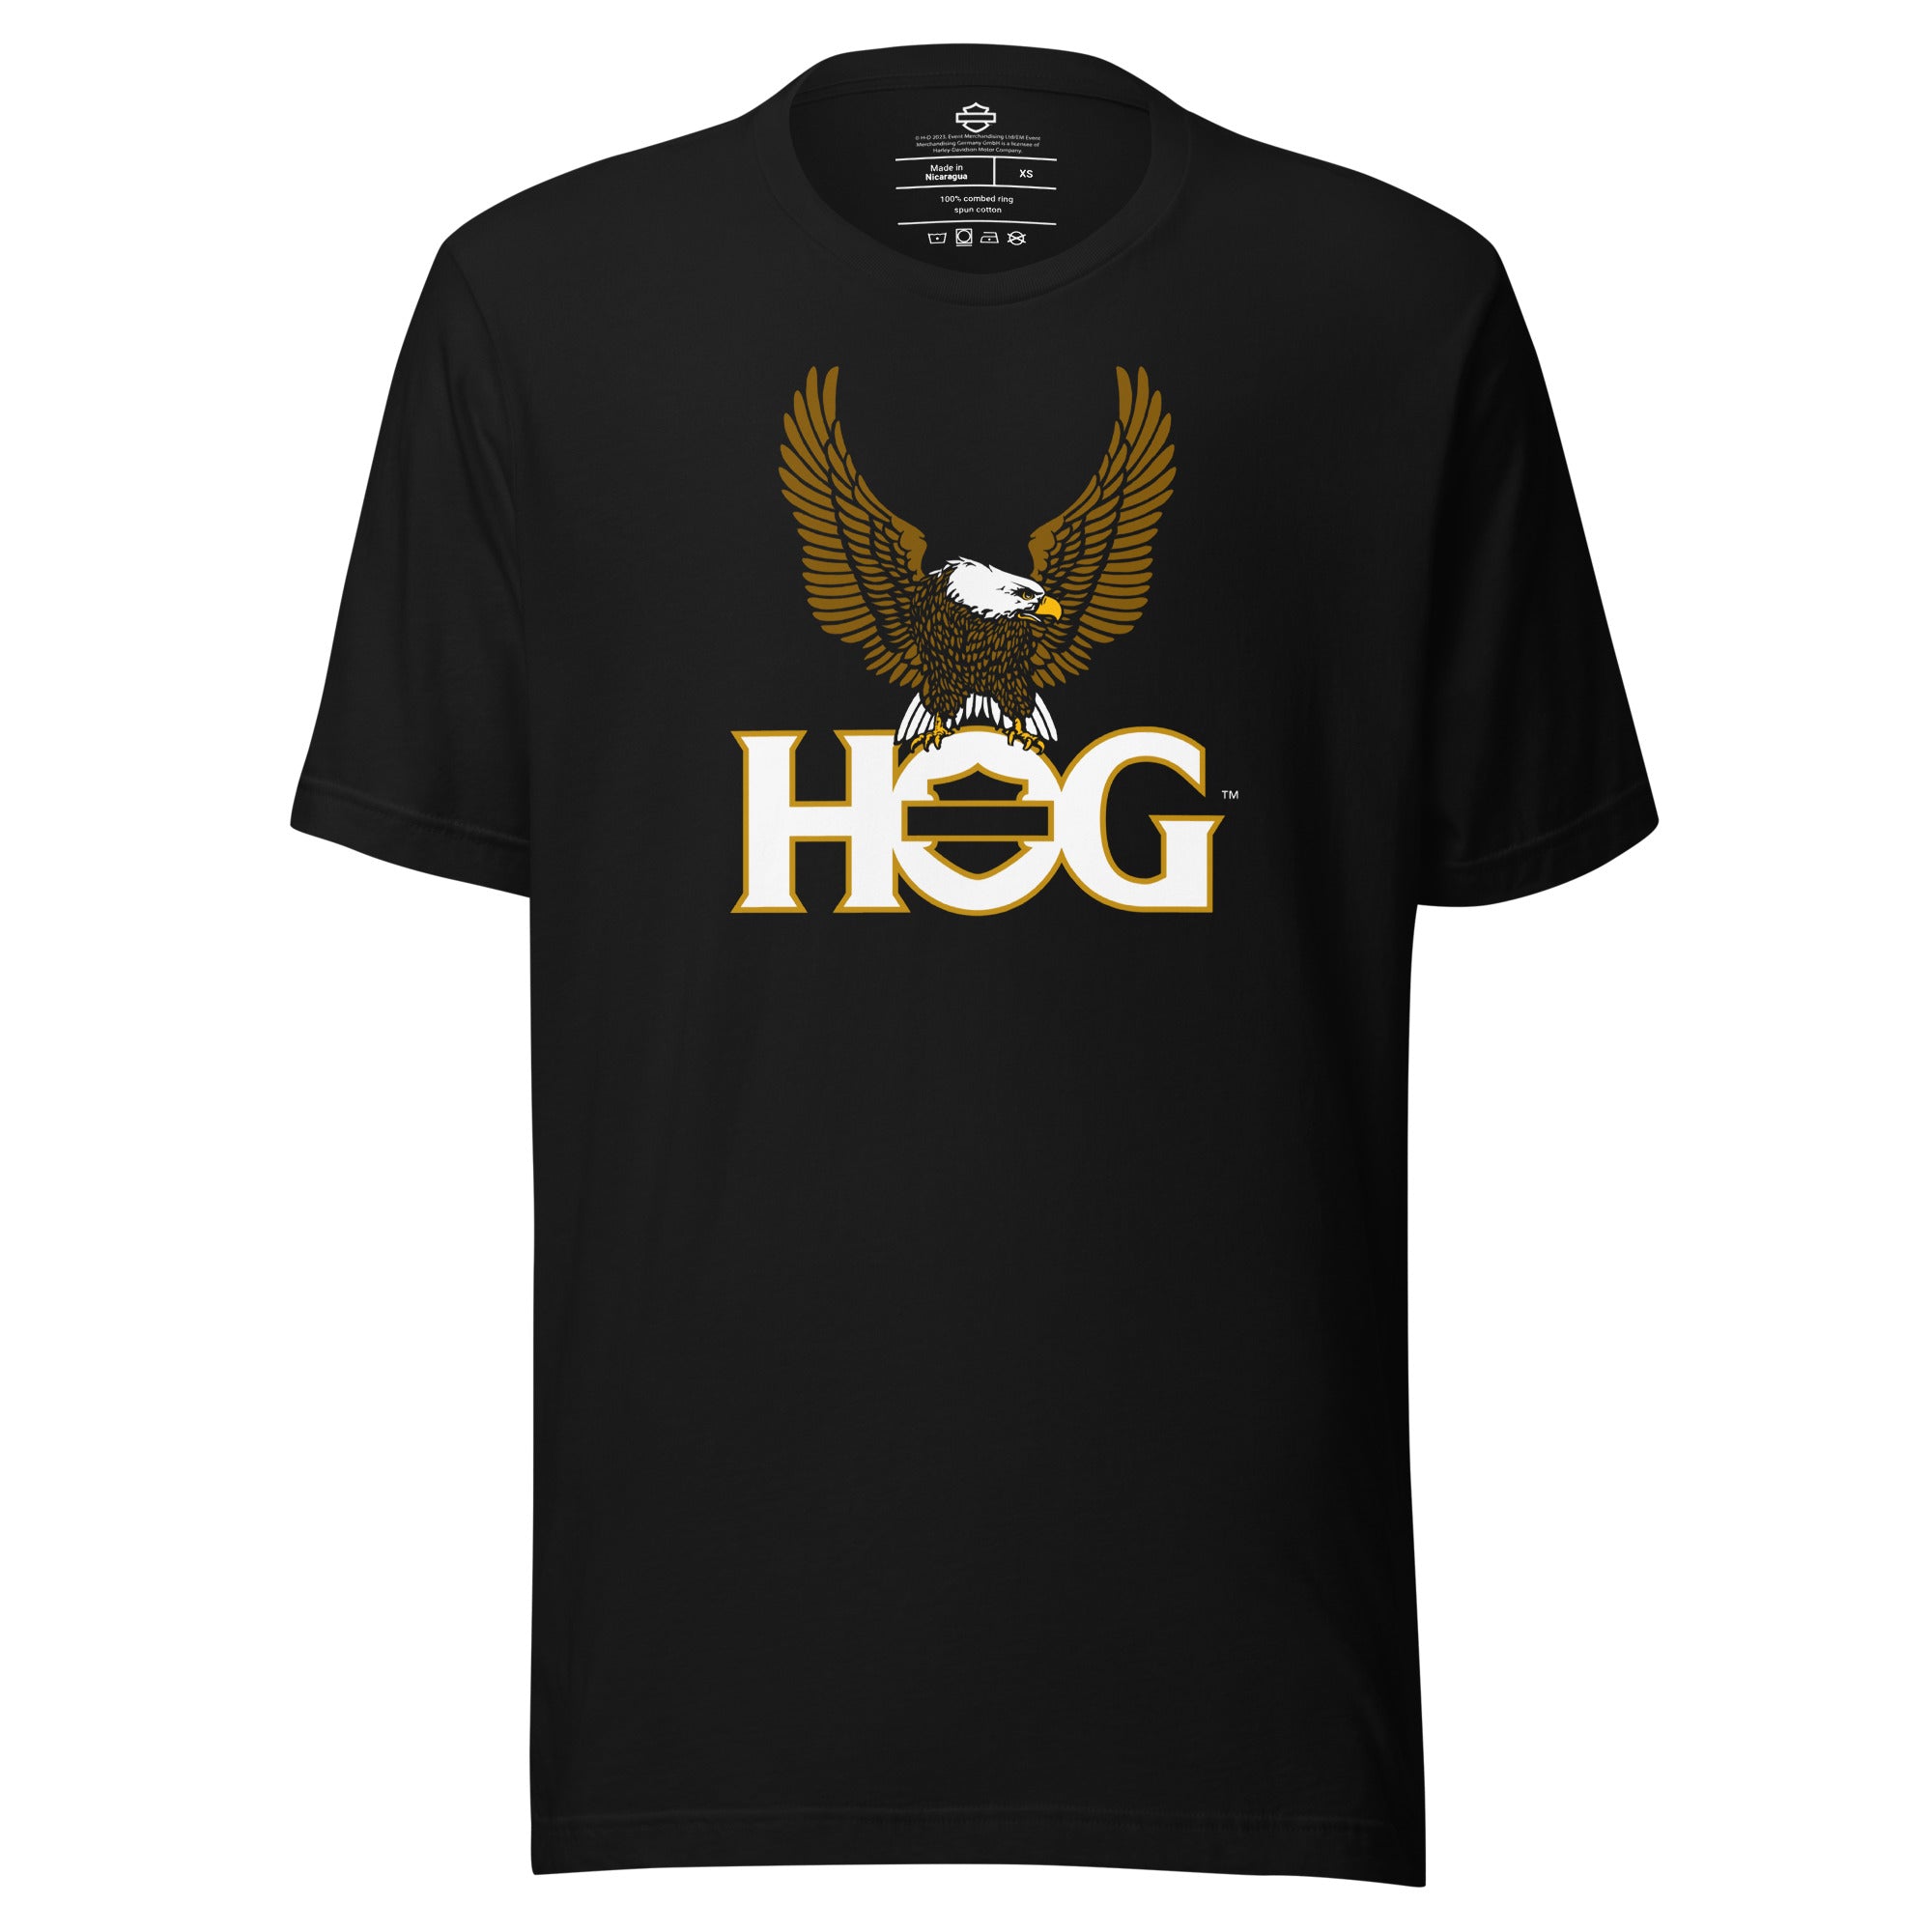 HOG Eagle Wings Unisex T-Shirt